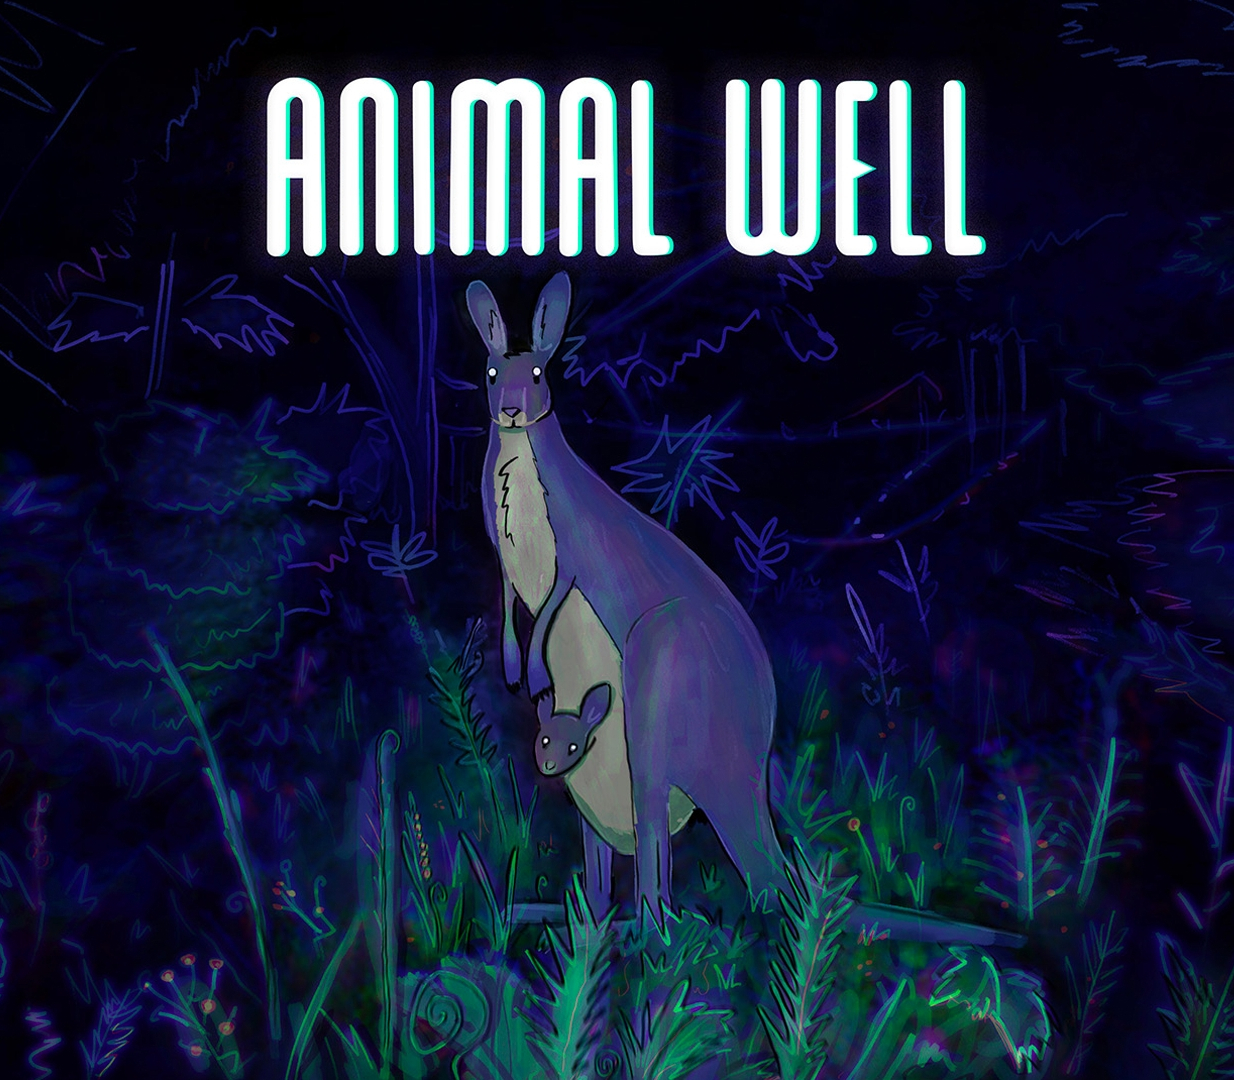 ANIMAL WELL PC Steam